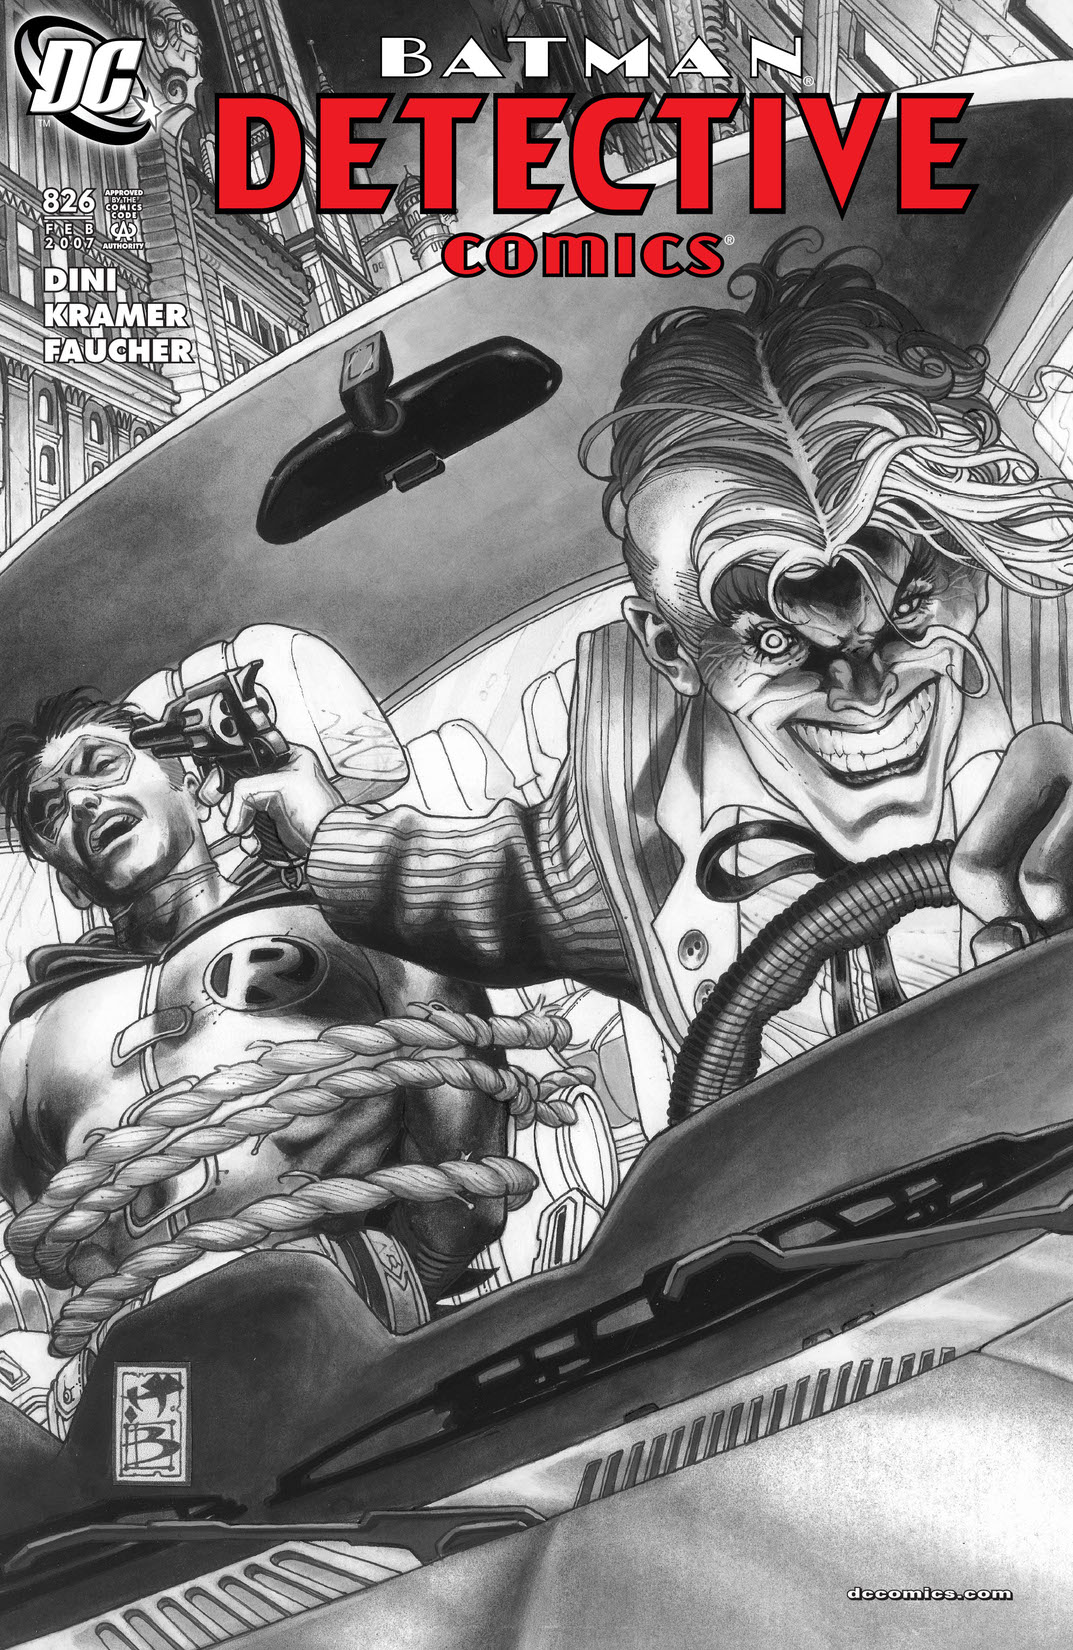 Detective Comics (1937-) #826 preview images